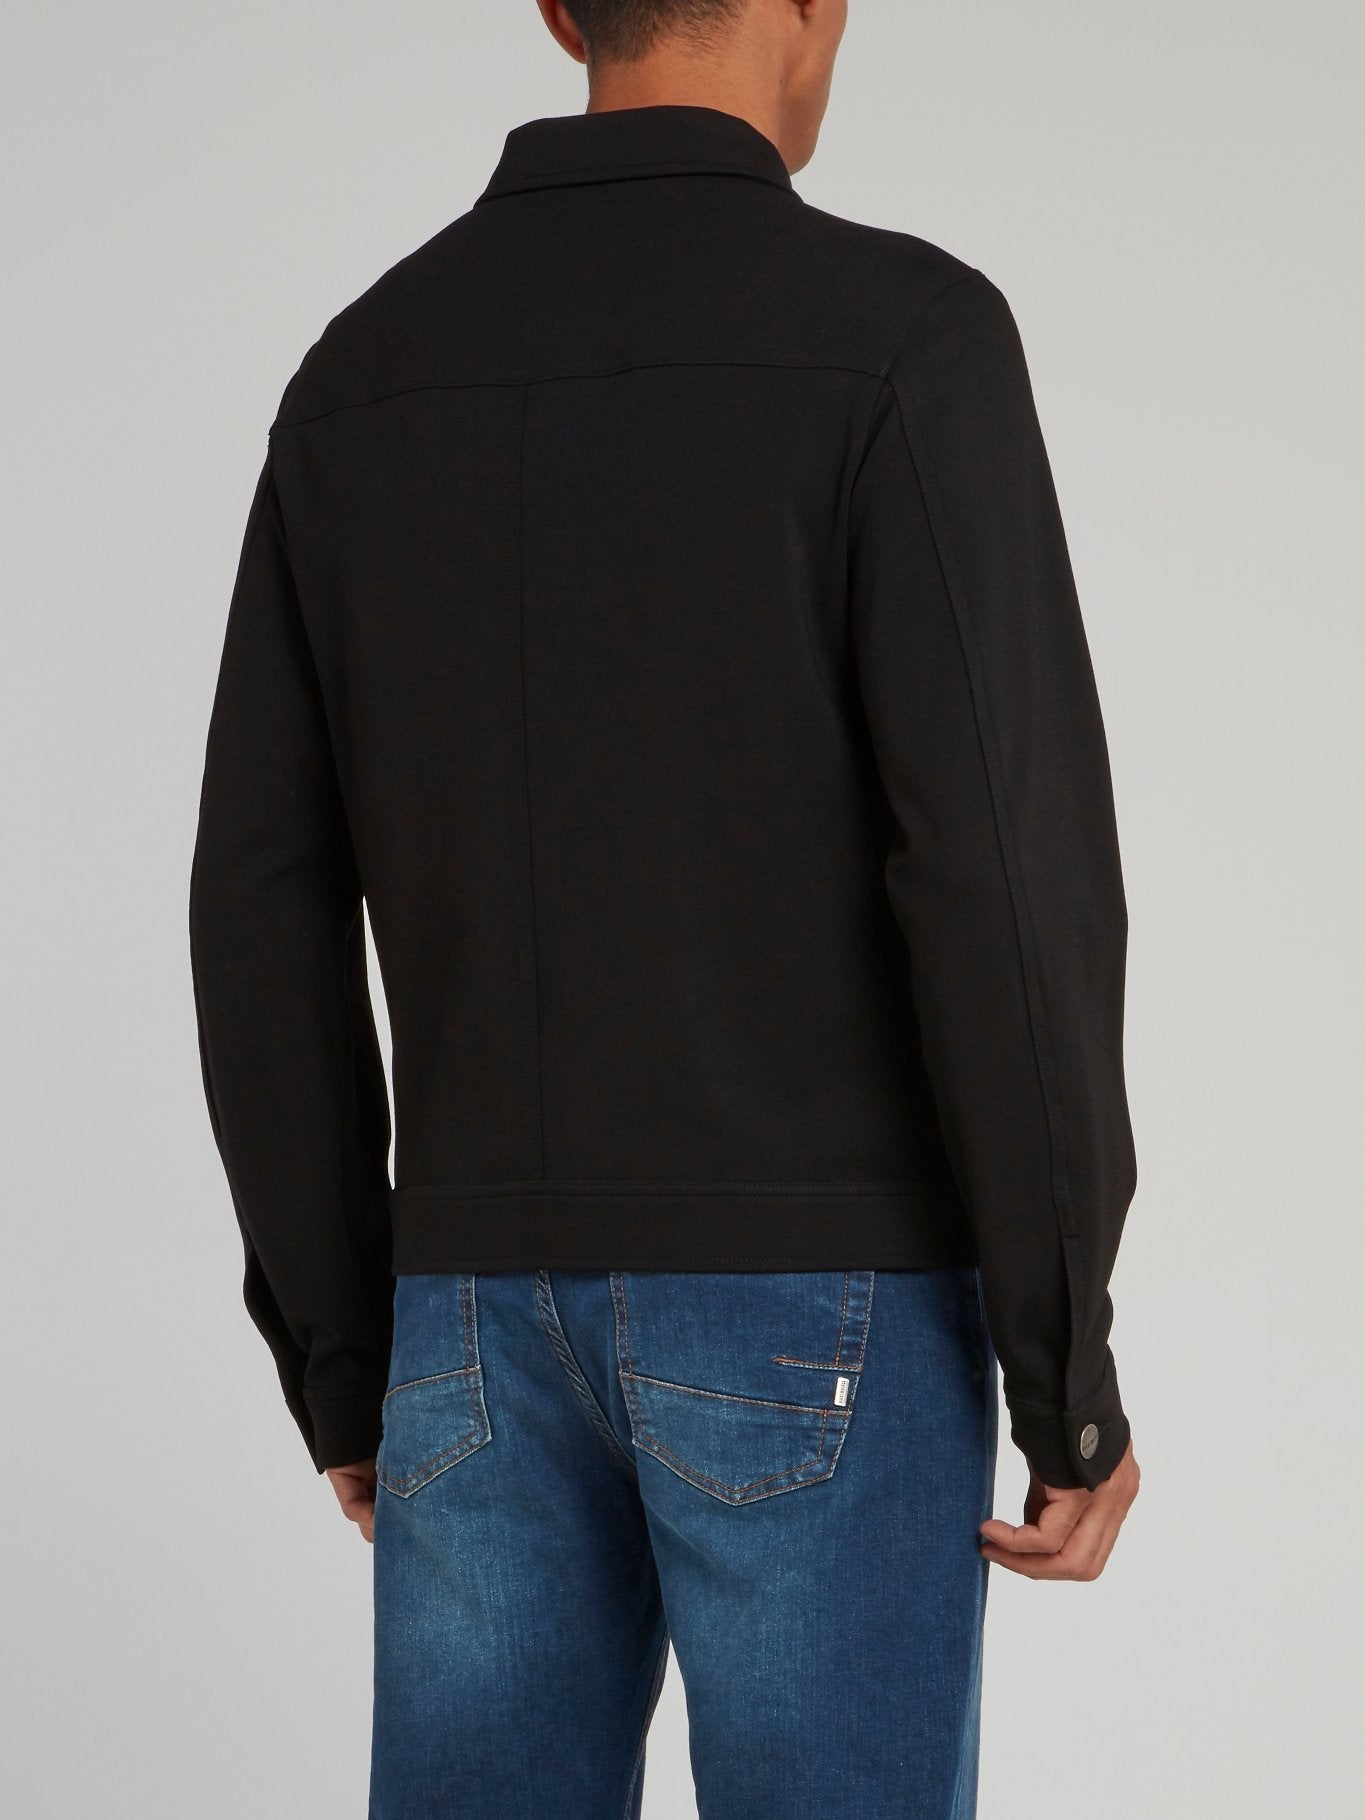 Black Jean Button Jacket